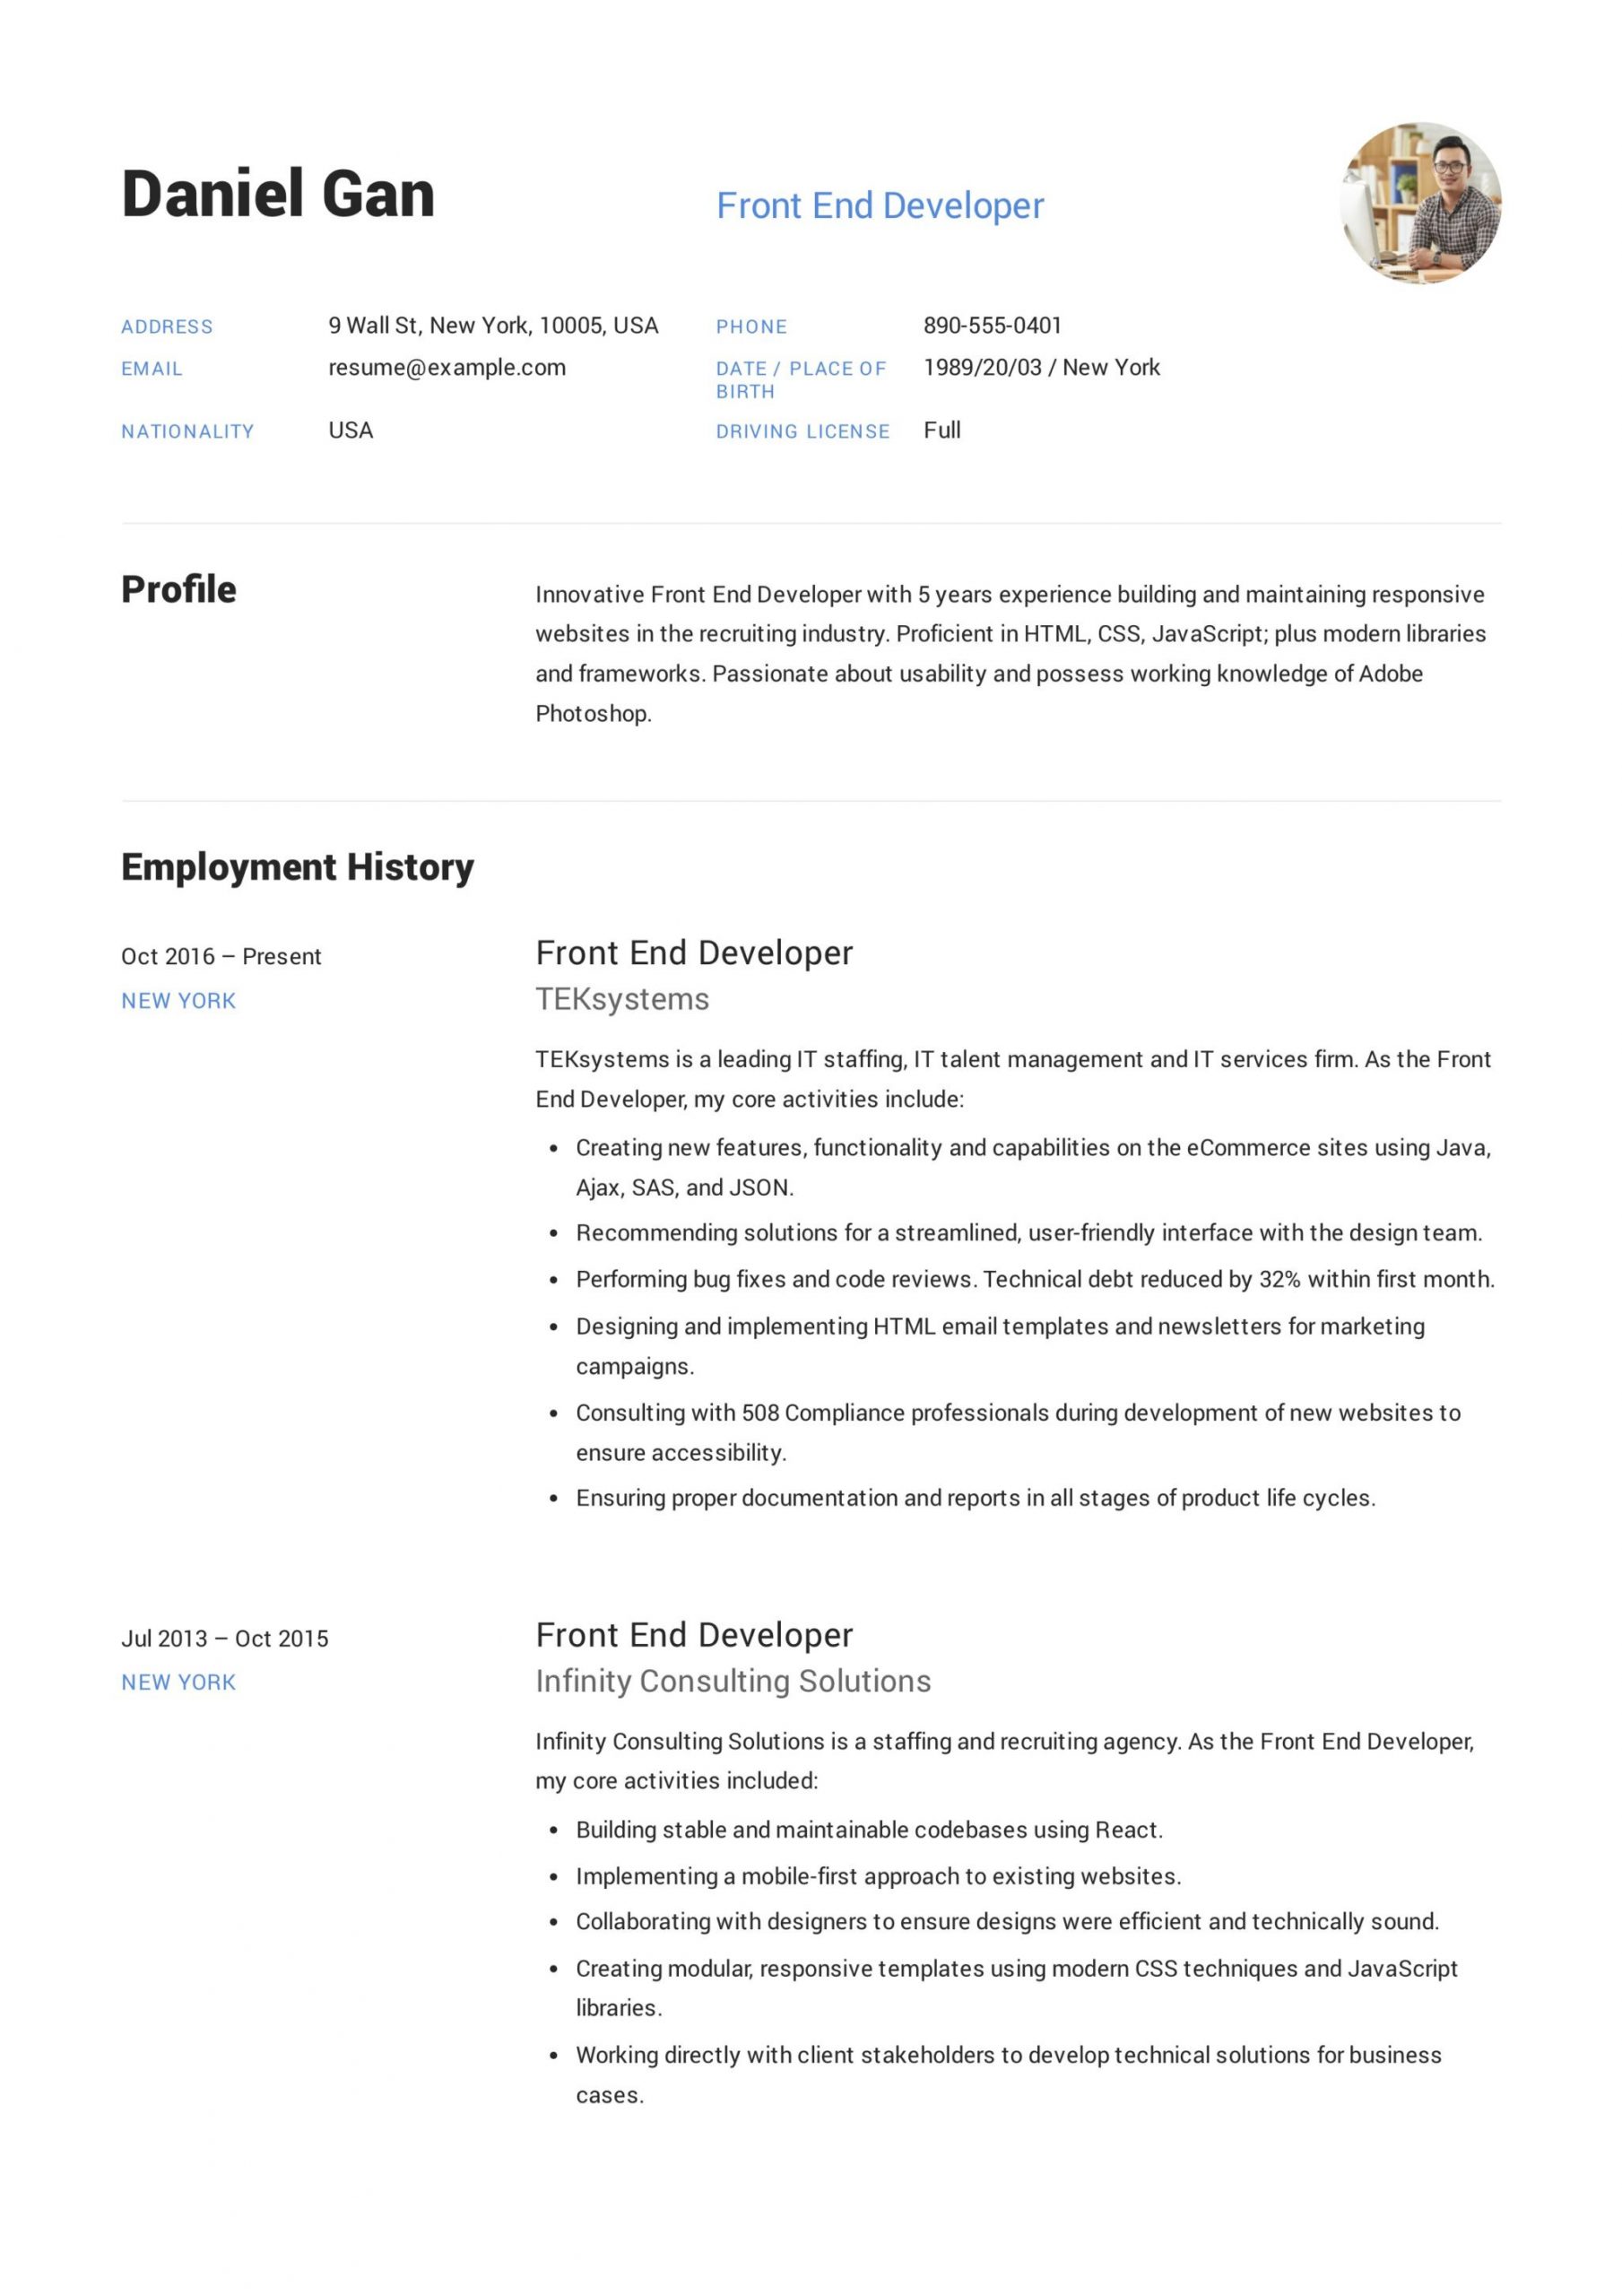 Sample Resume for Junior Web Developer 17 Front-end Developer Resume Examples & Guide Pdf 2020